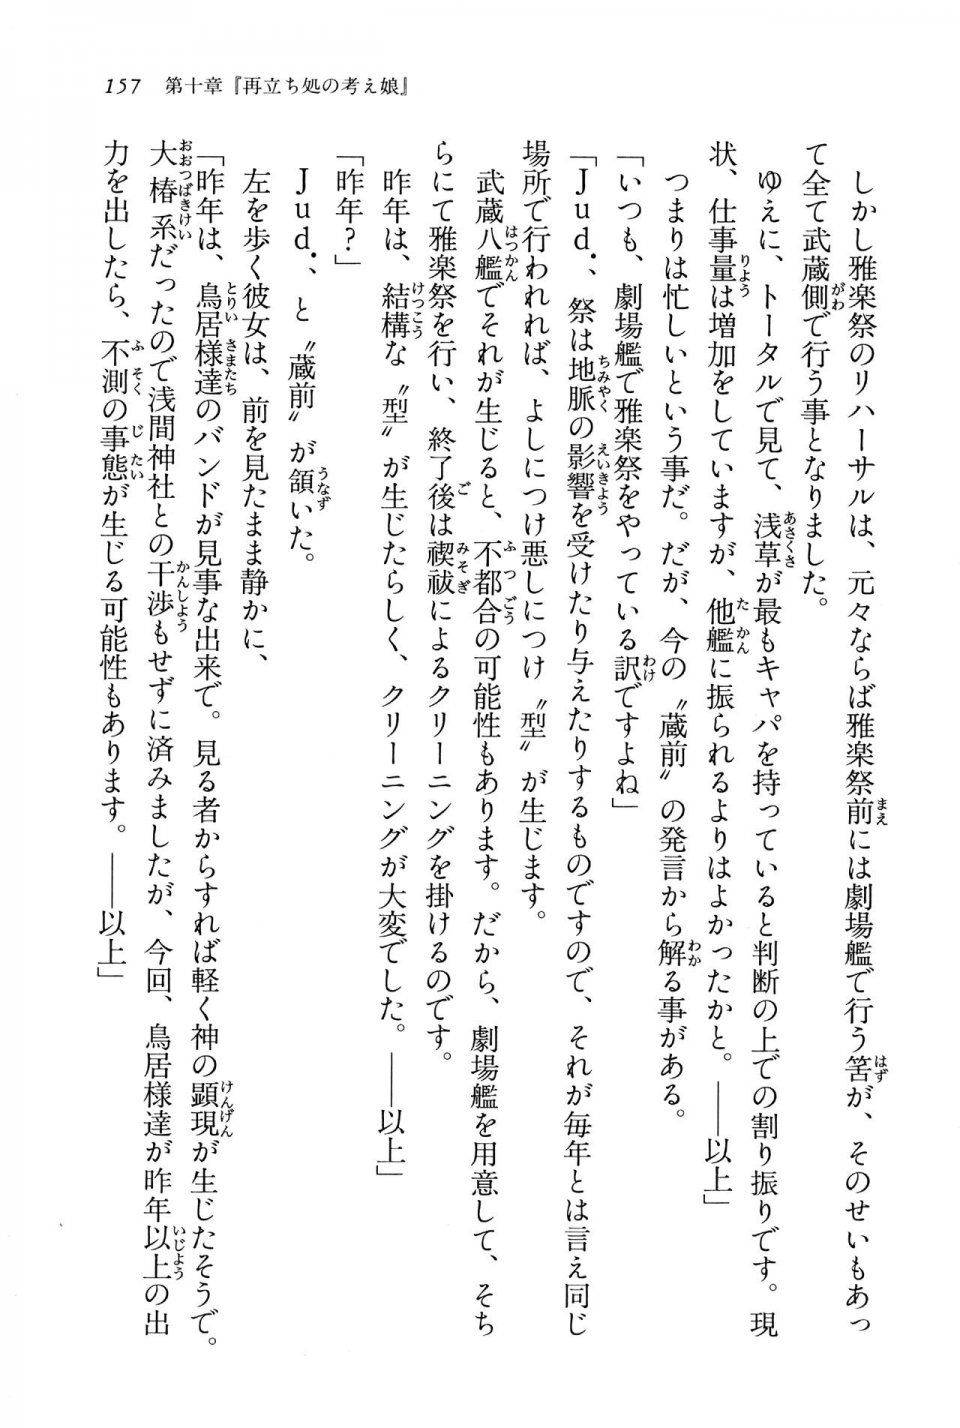 Kyoukai Senjou no Horizon BD Special Mininovel Vol 6(3B) - Photo #161